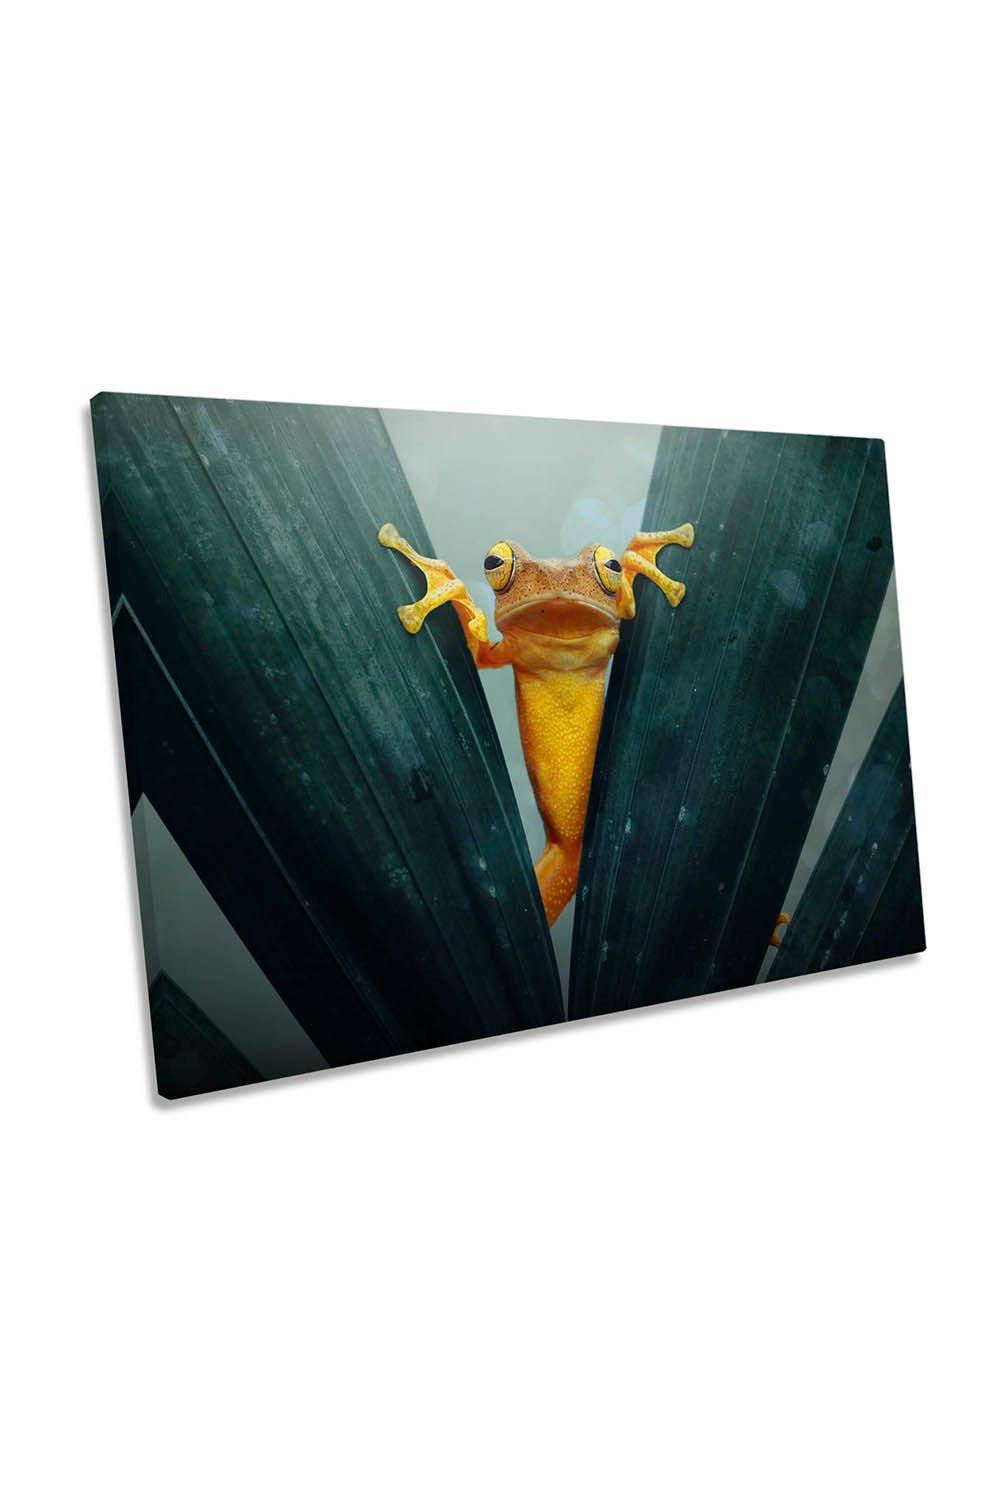 Orange Peeking Frog Canvas Wall Art Picture Print